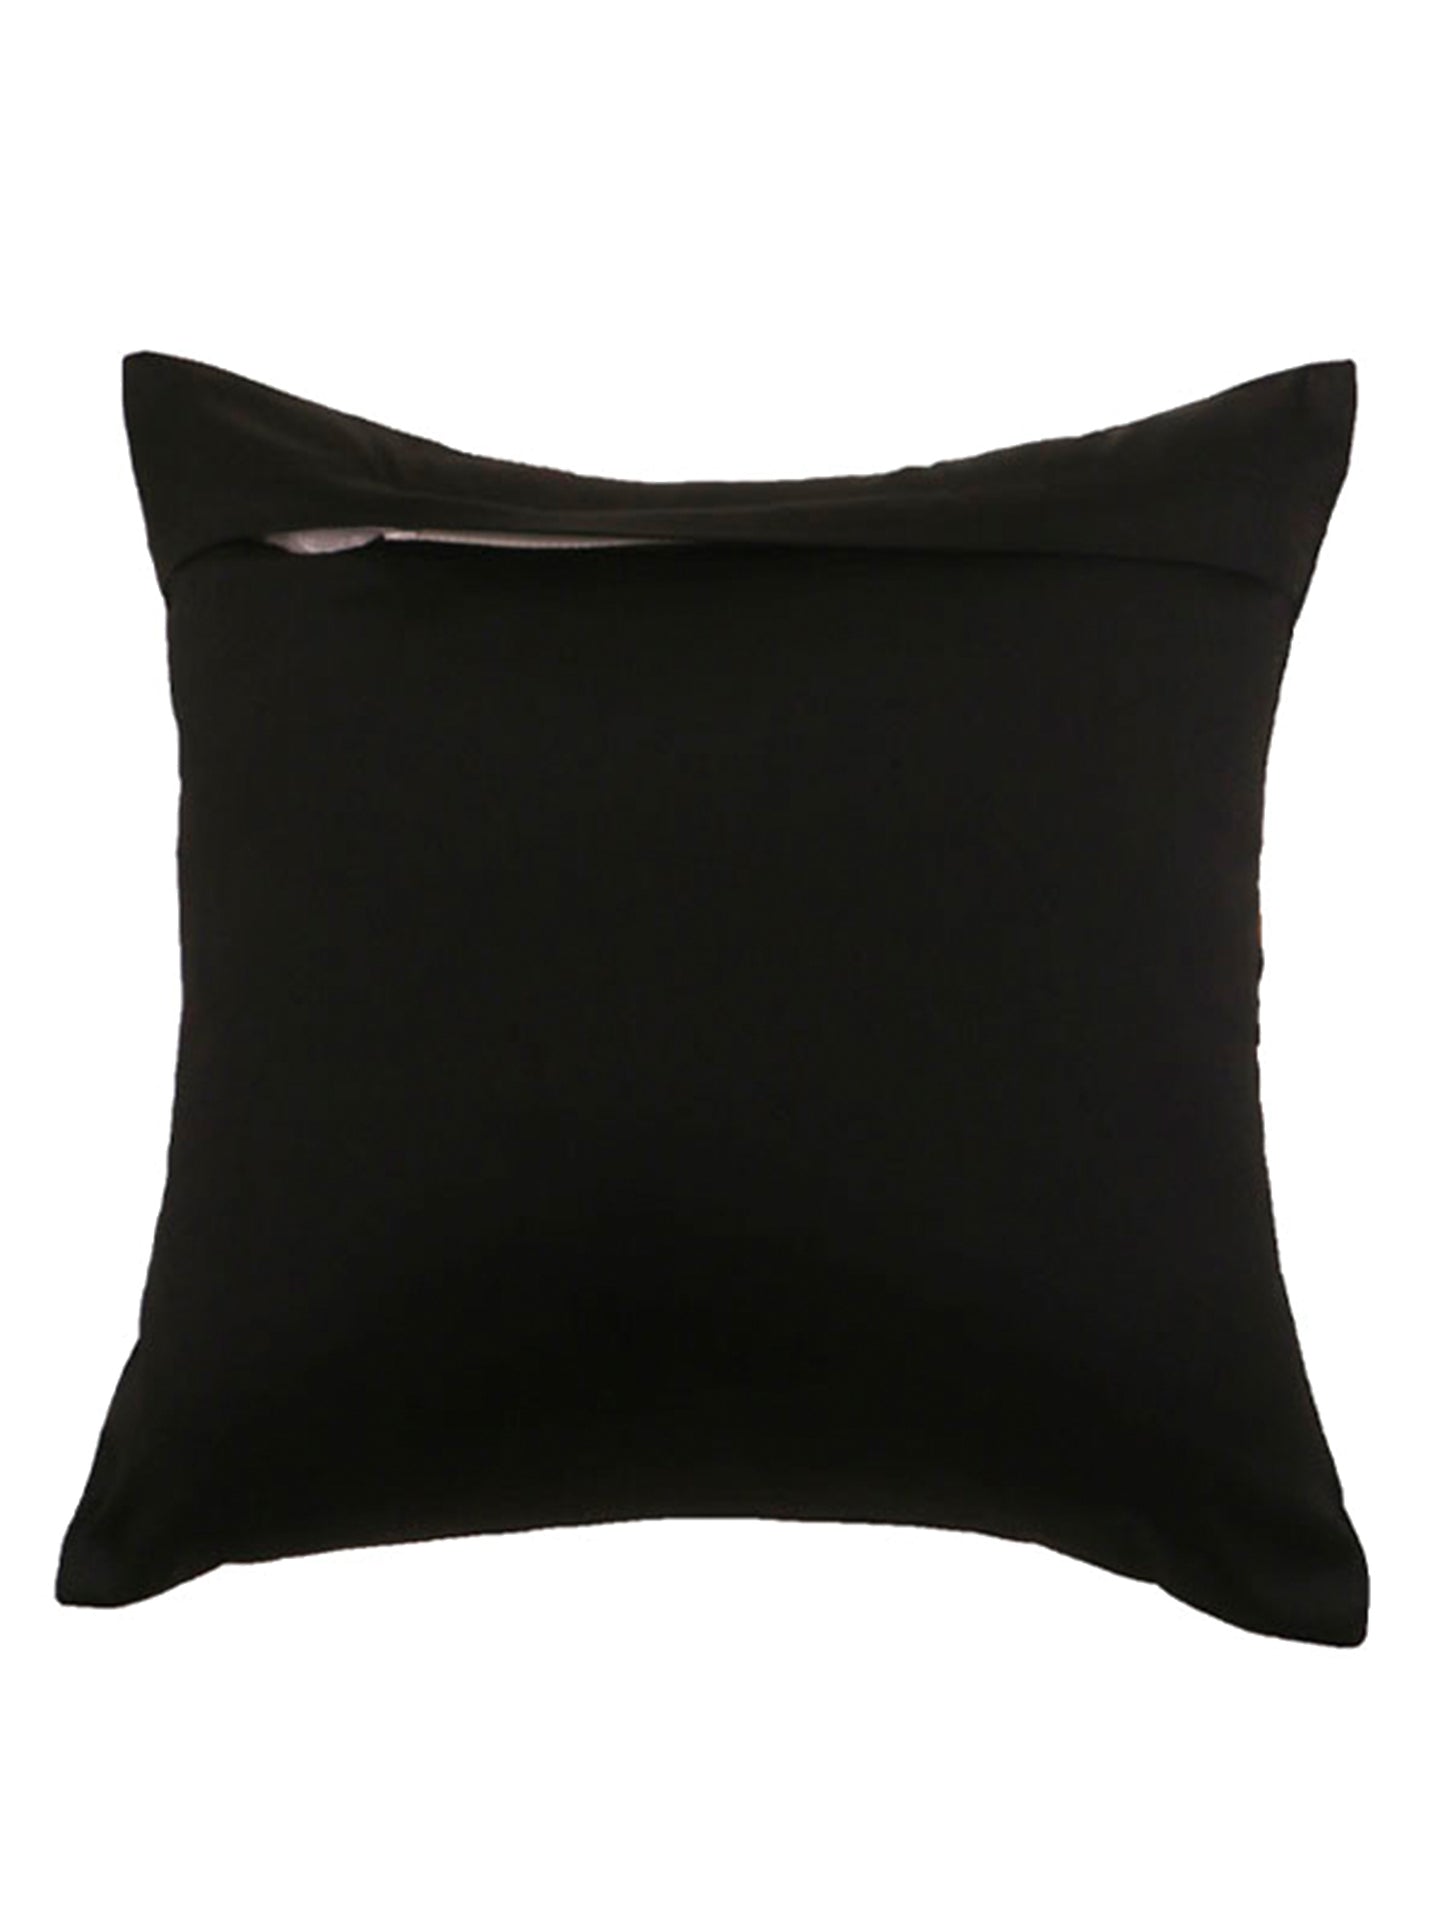 Cushion Cover Polyester Sequin Center Border Black - 12" X 12"